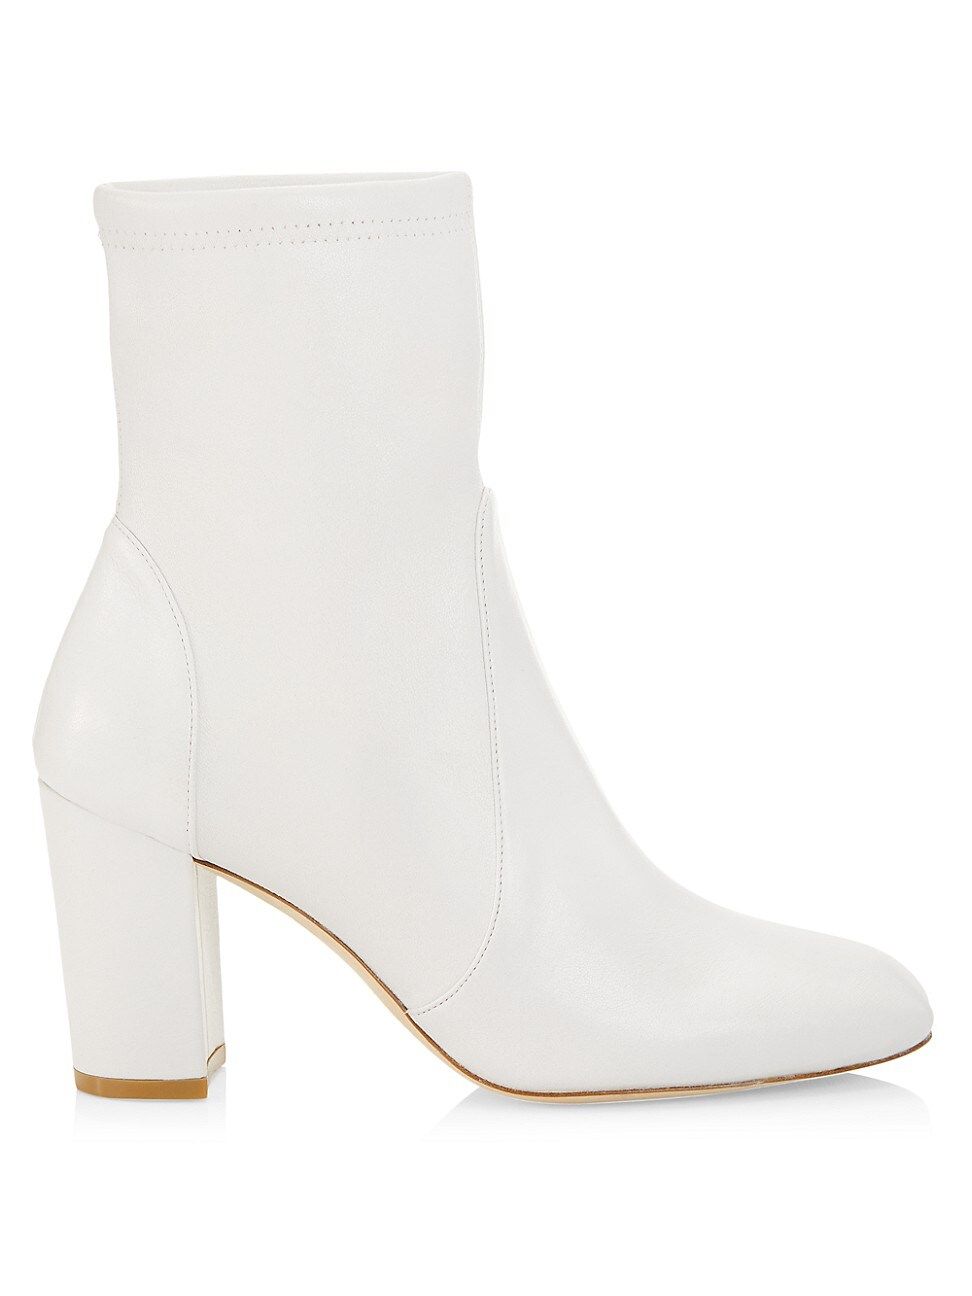 Stuart Weitzman Women's Caressa Leather Sock Boots - White - Size 6 | Saks Fifth Avenue